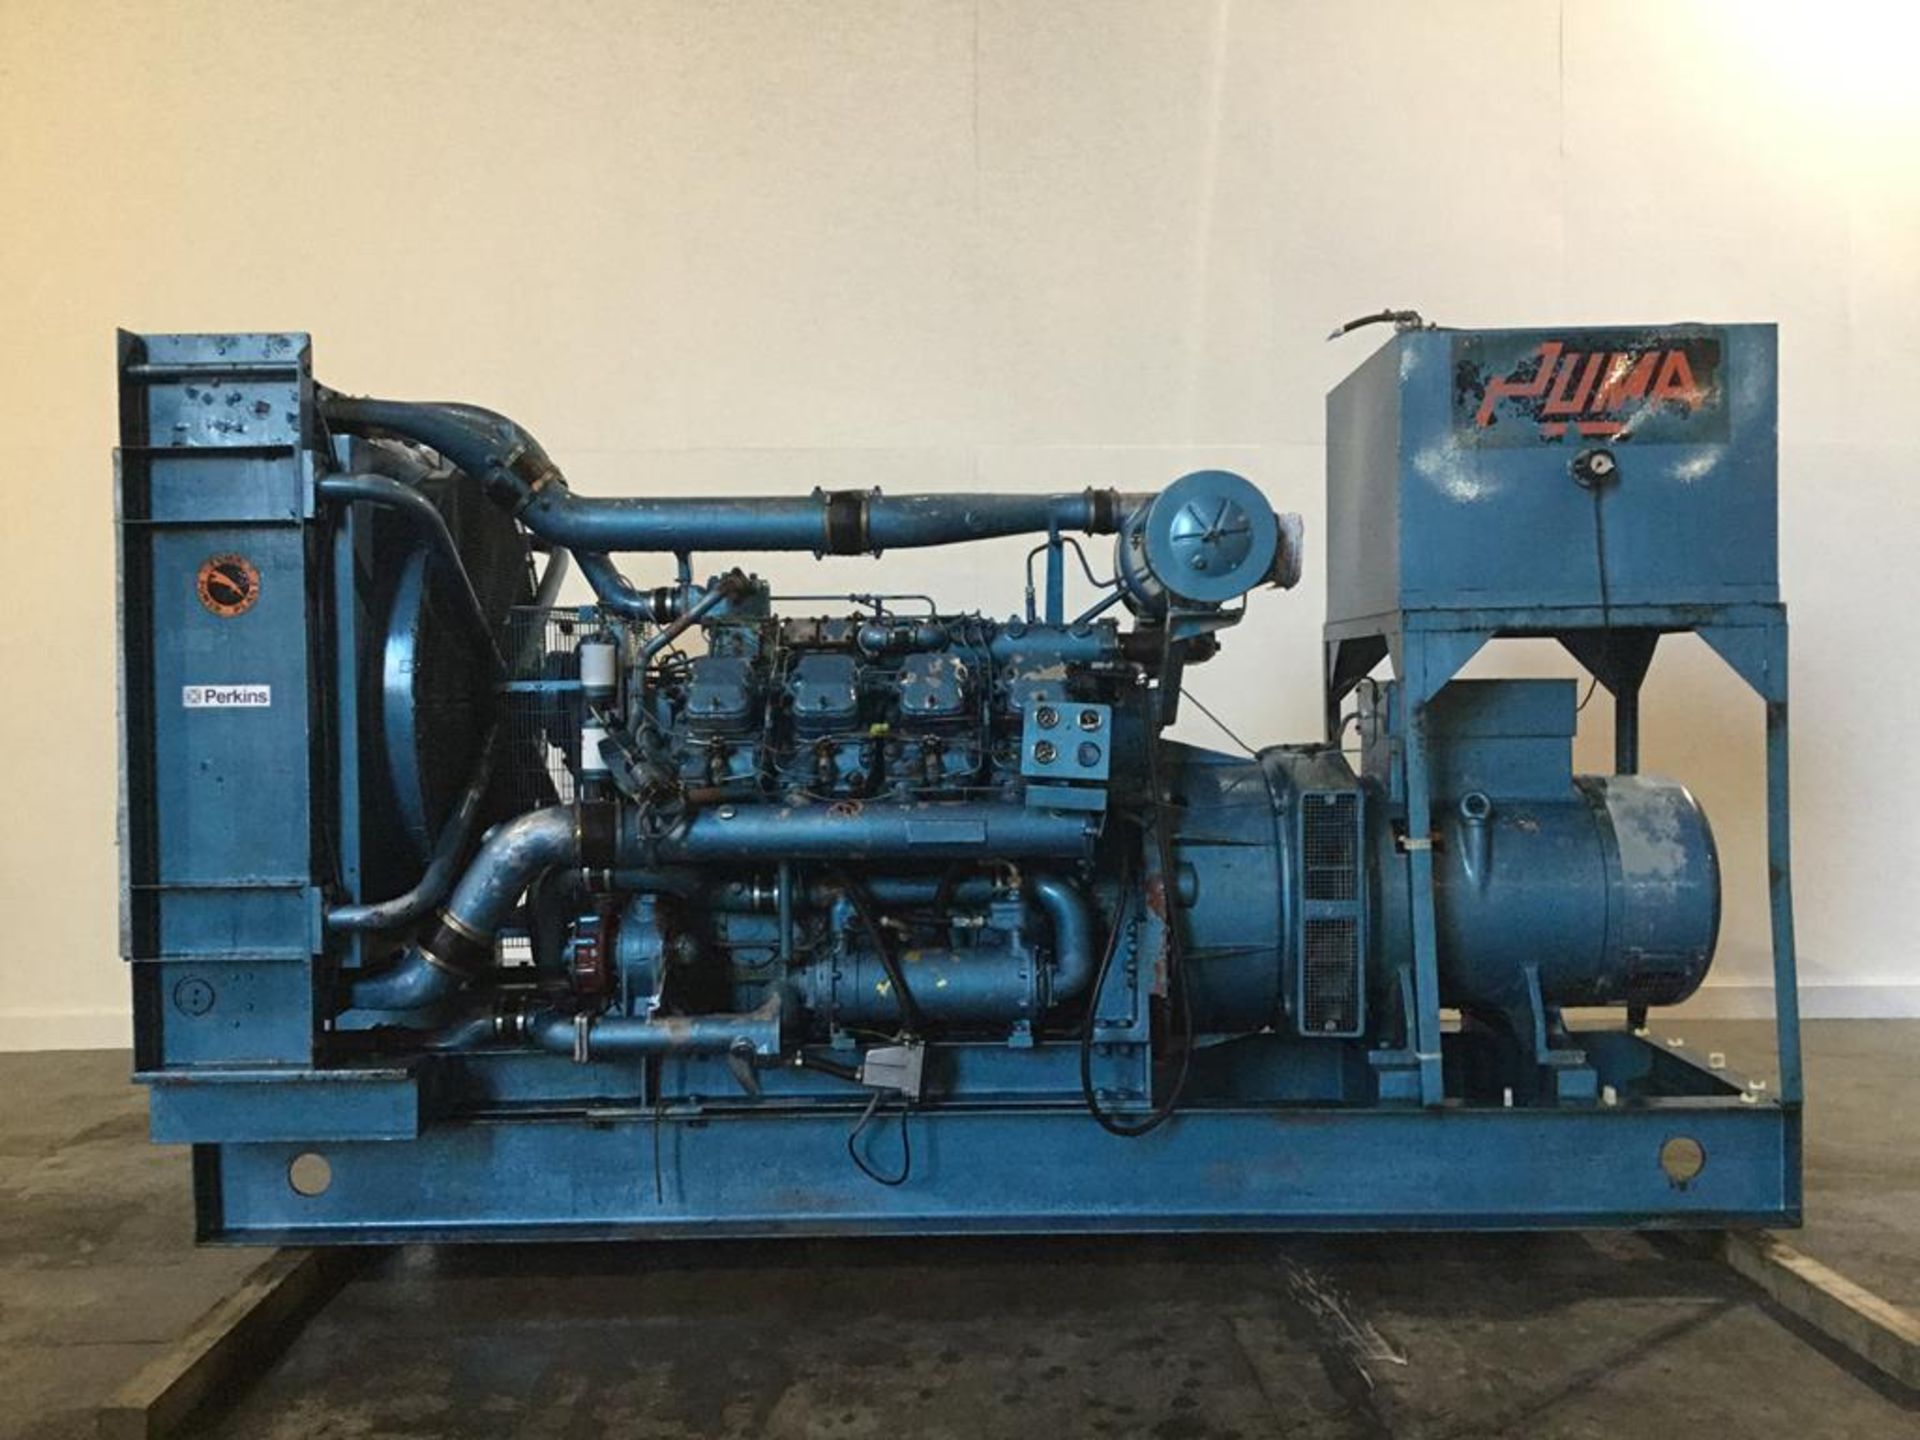 Dorman 395kva Diesel Generator